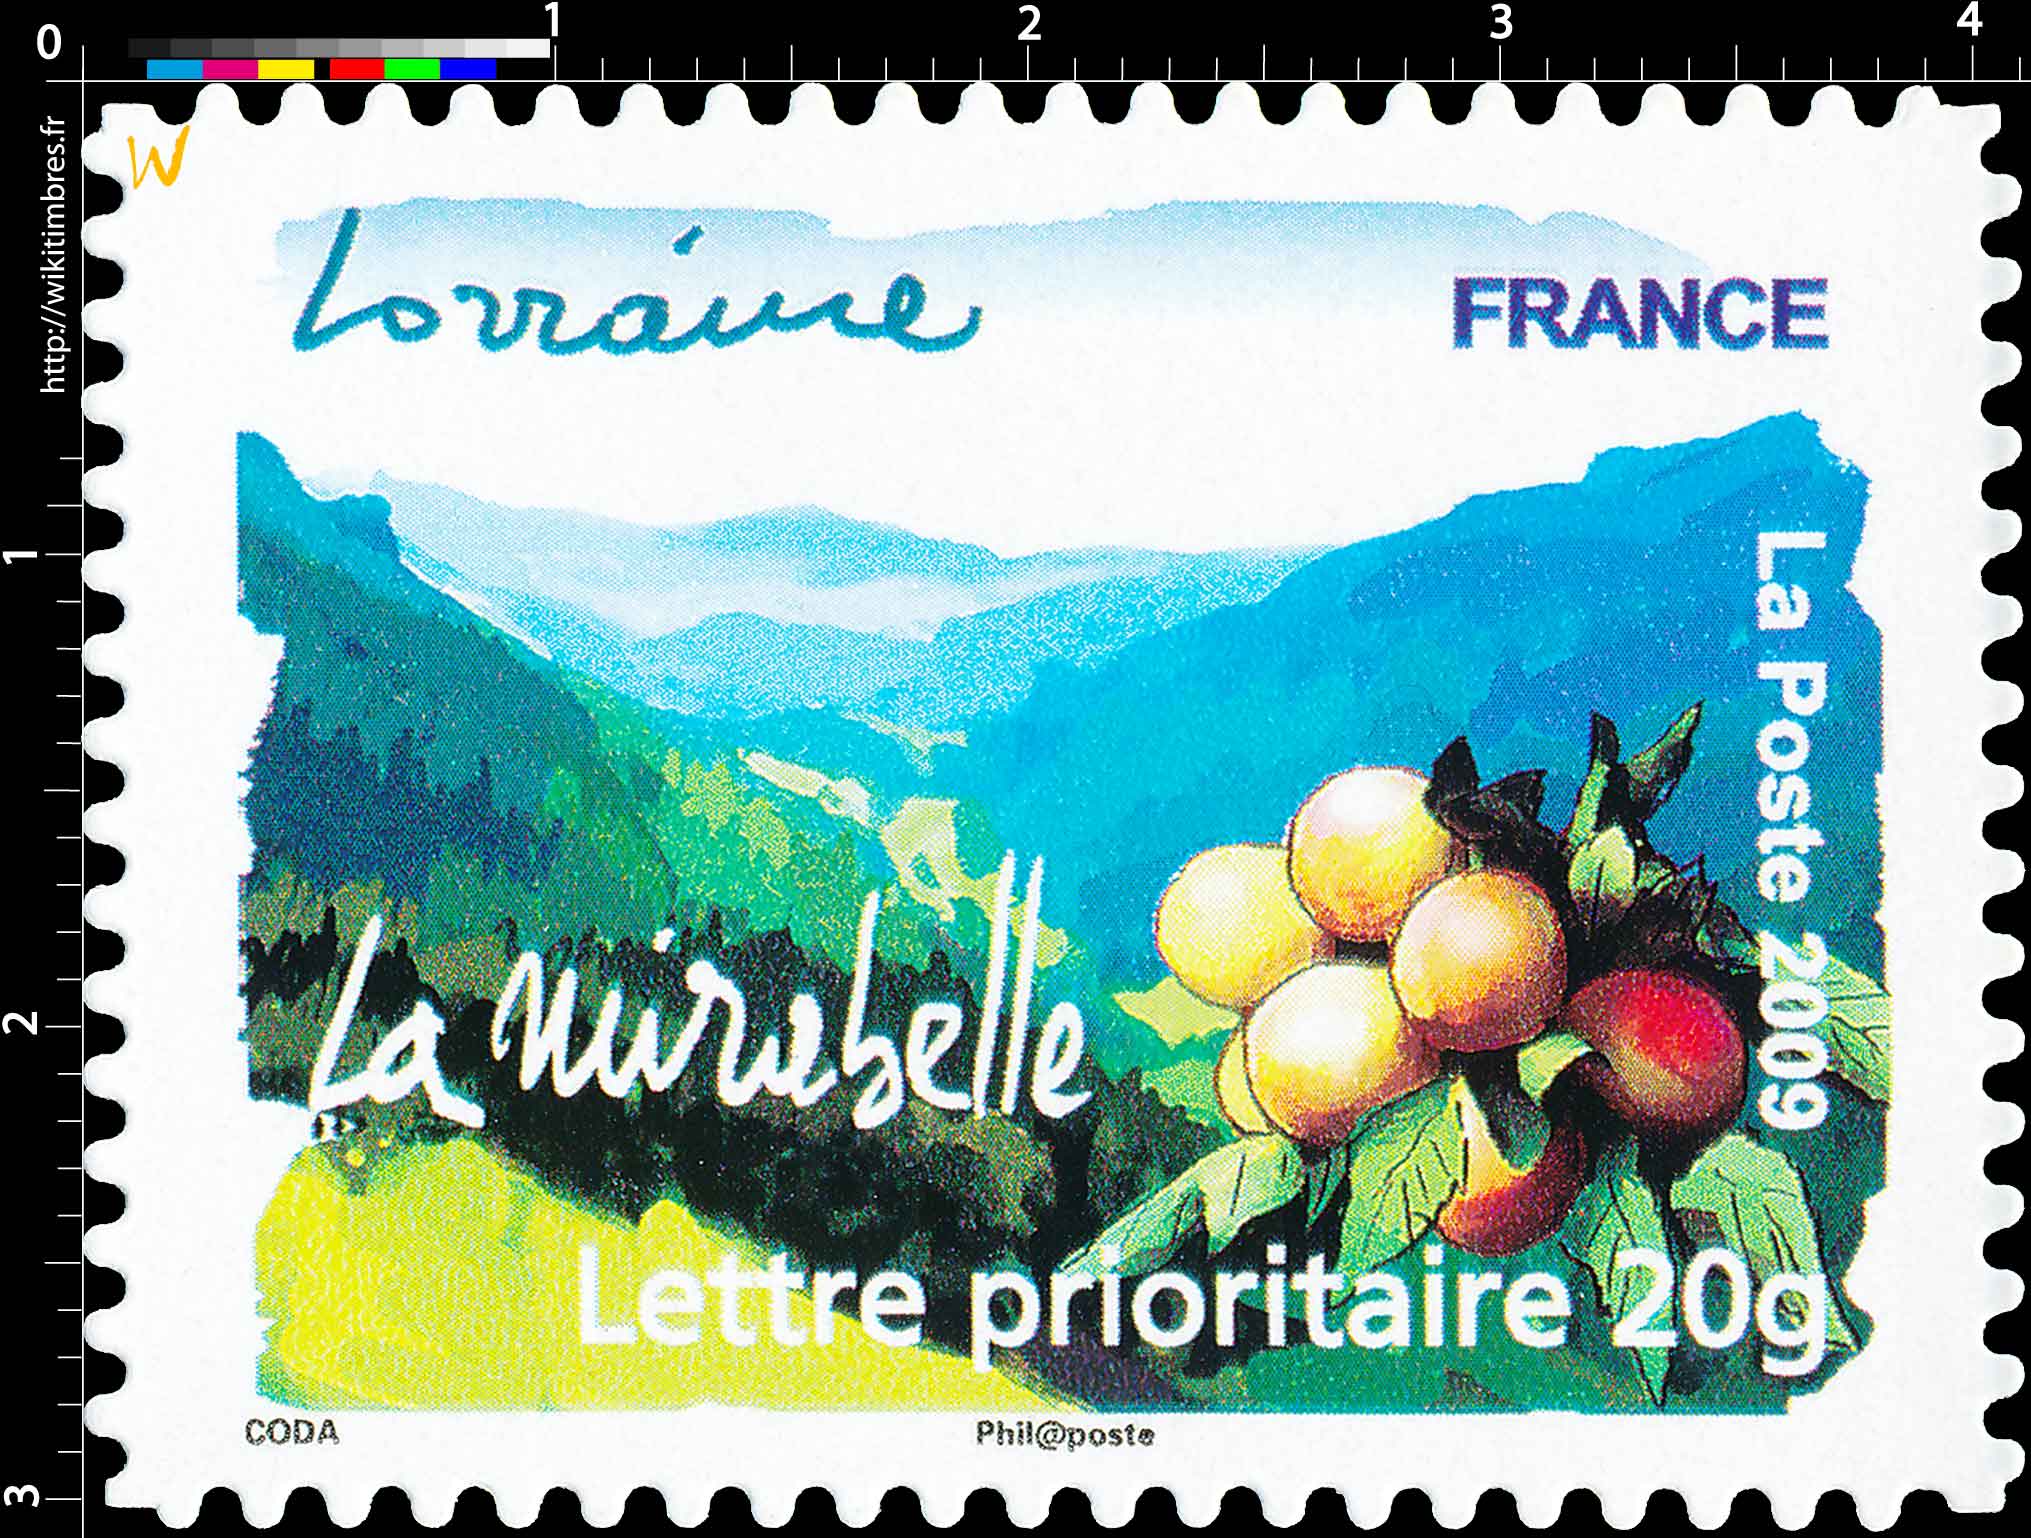 2009 Lorraine La mirabelle